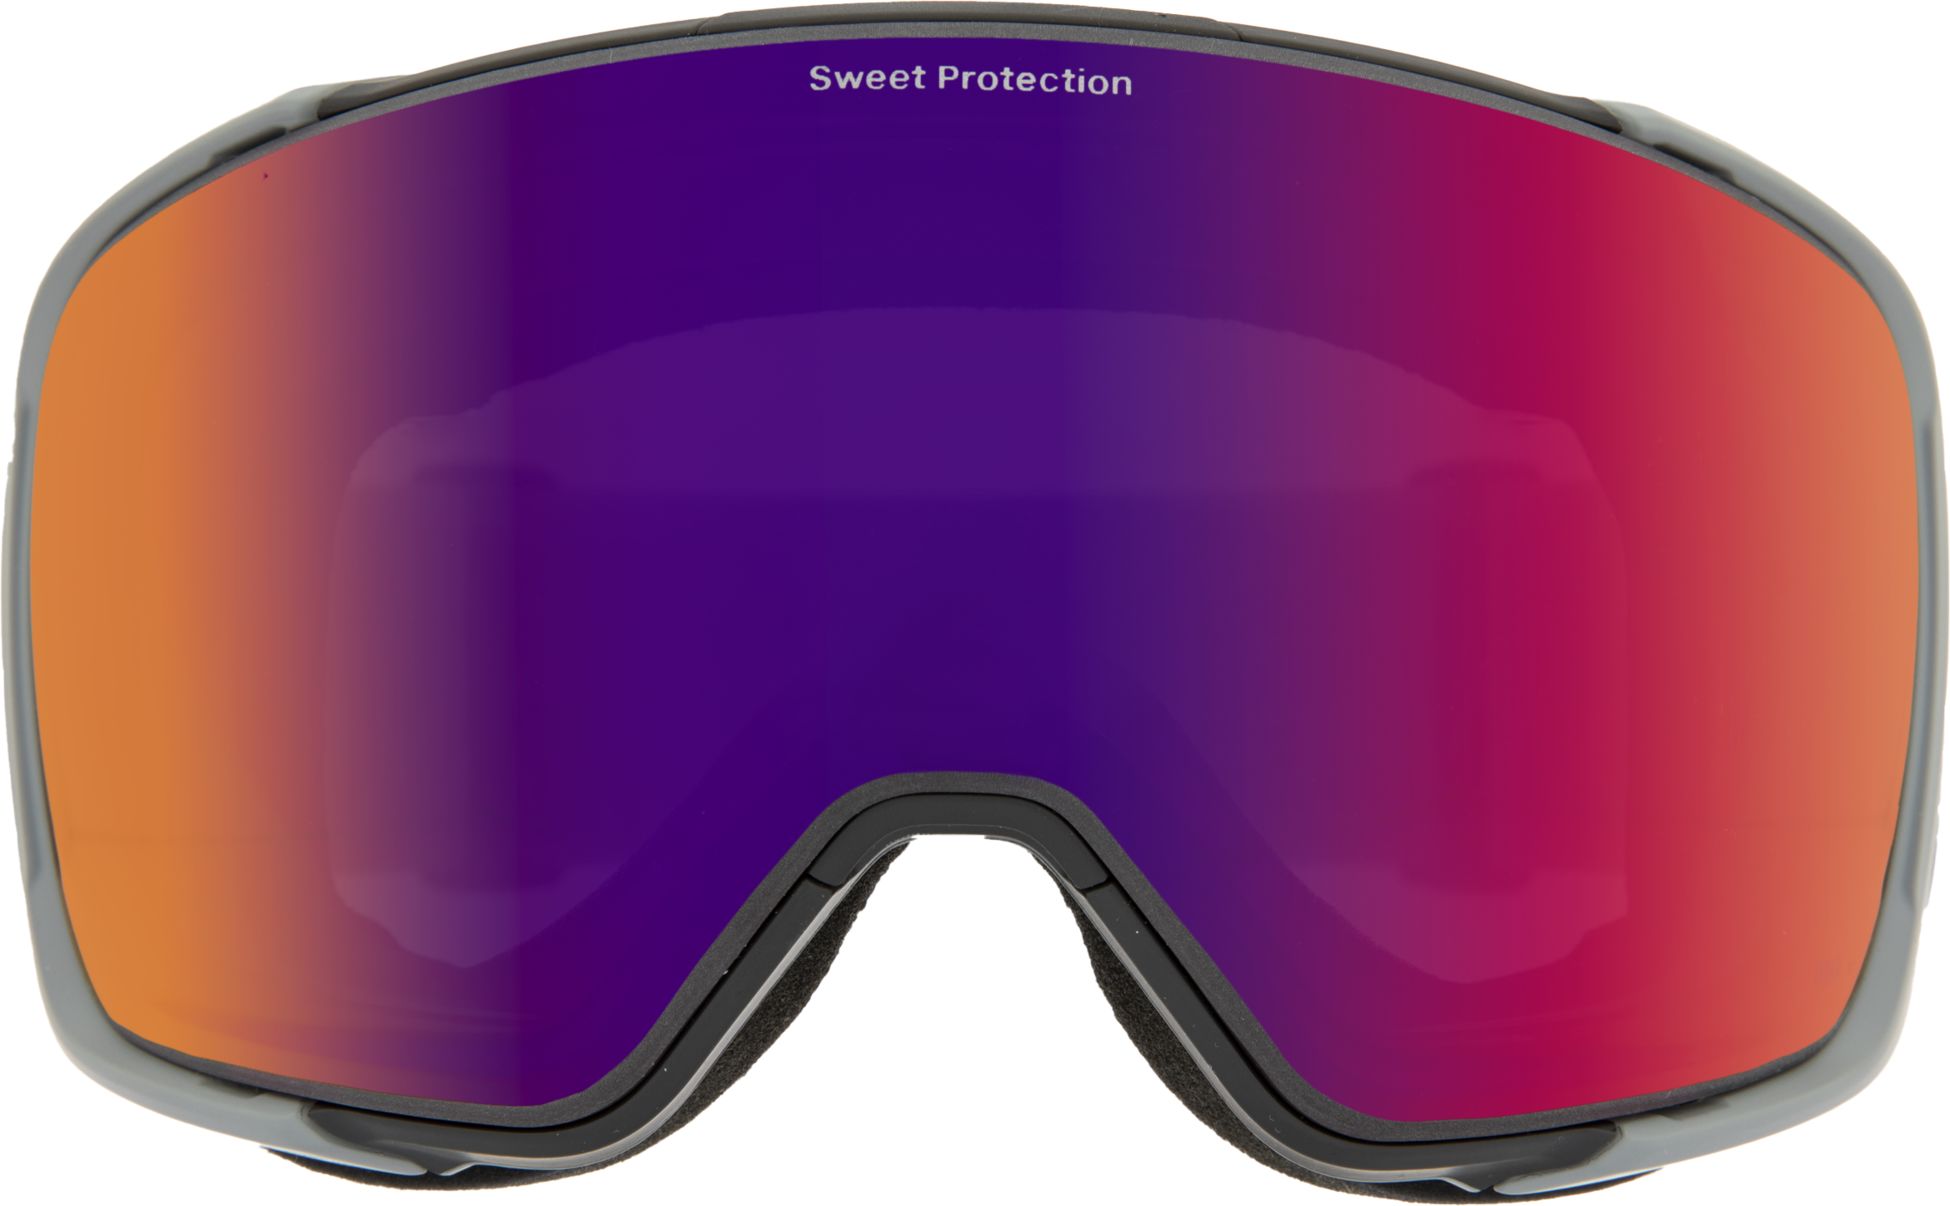 SWEET PROTECTION, INTERSTELLAR RIG REFLECT BLI GOGGLE